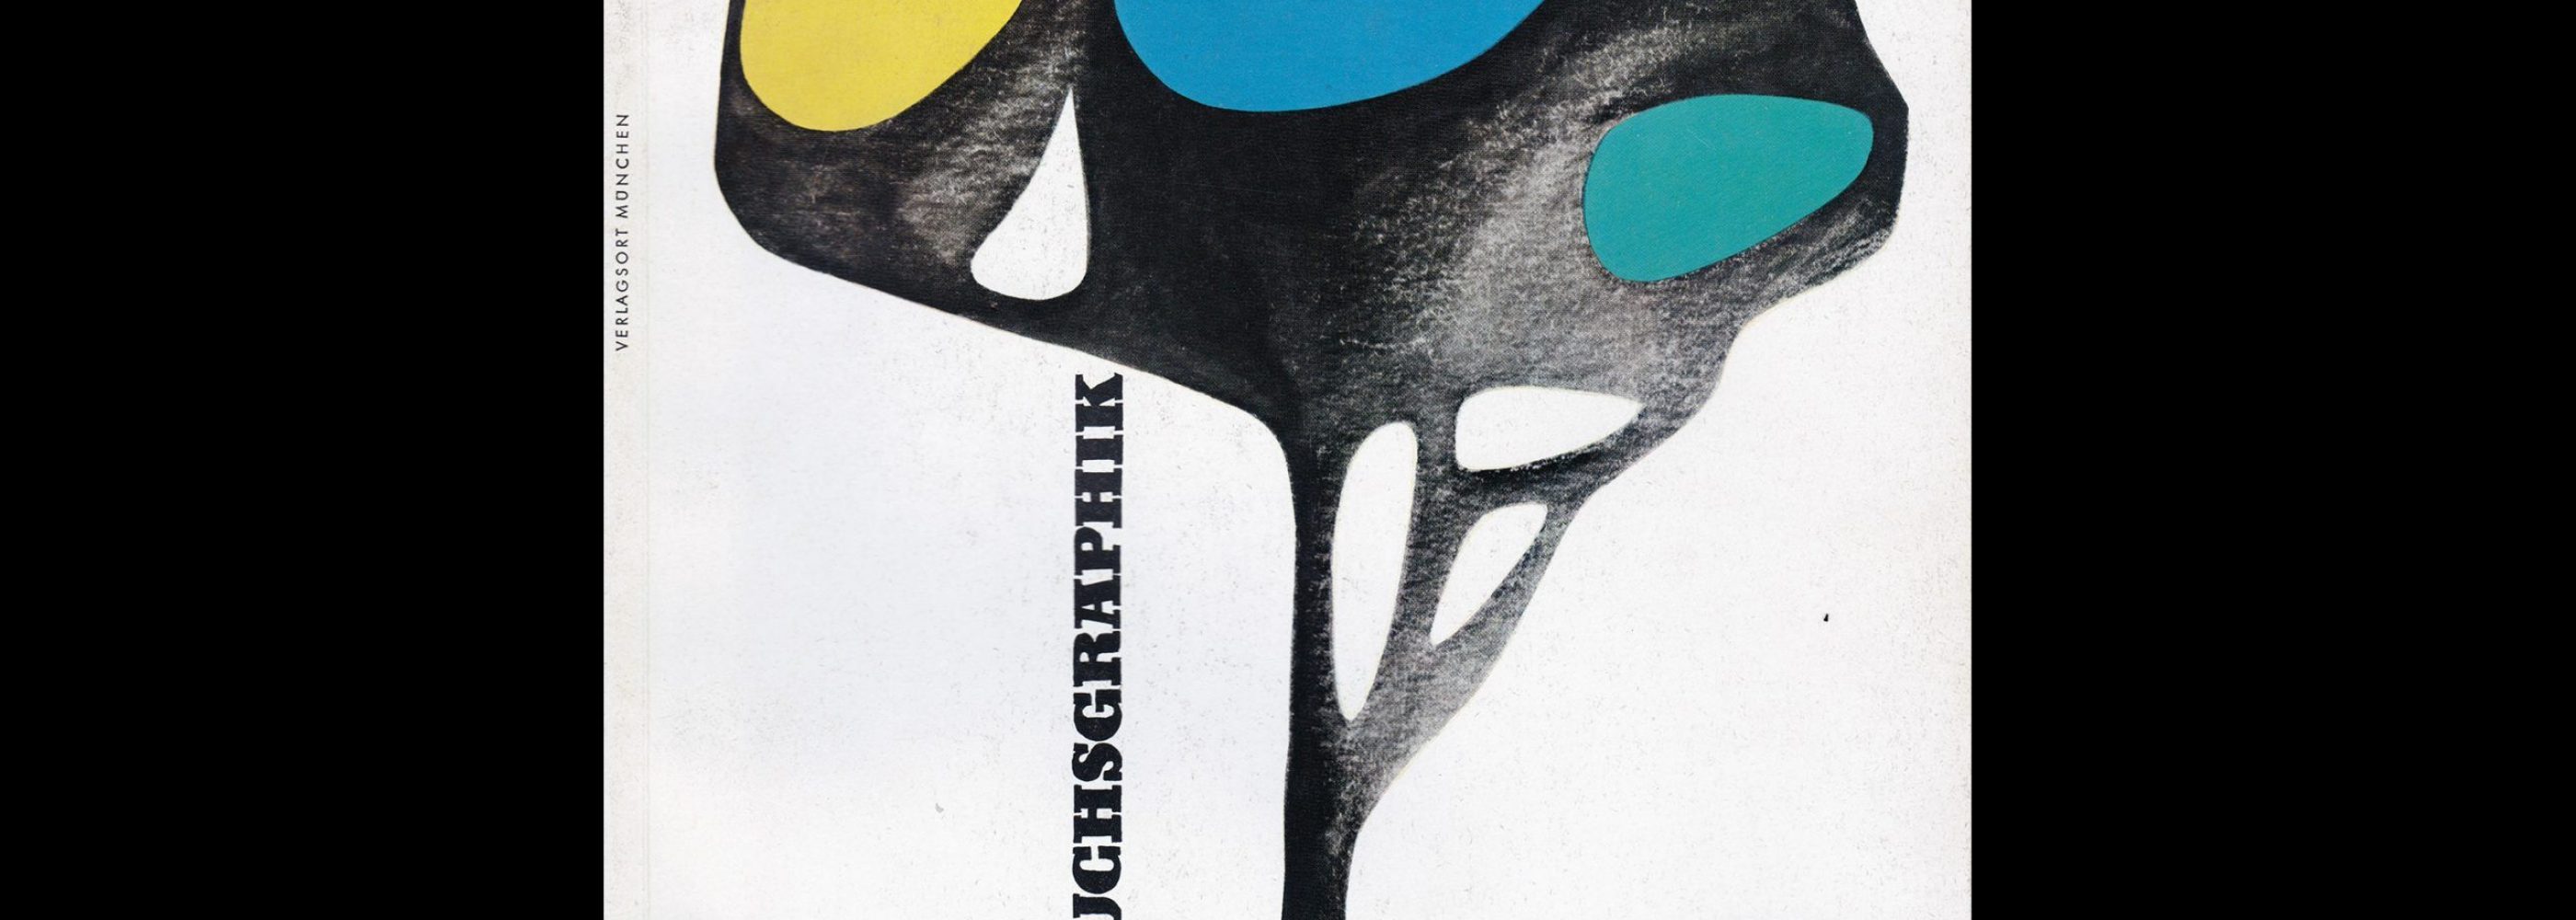 Gebrauchsgraphik, 8, 1957 cover design by Roman Cieslewicz